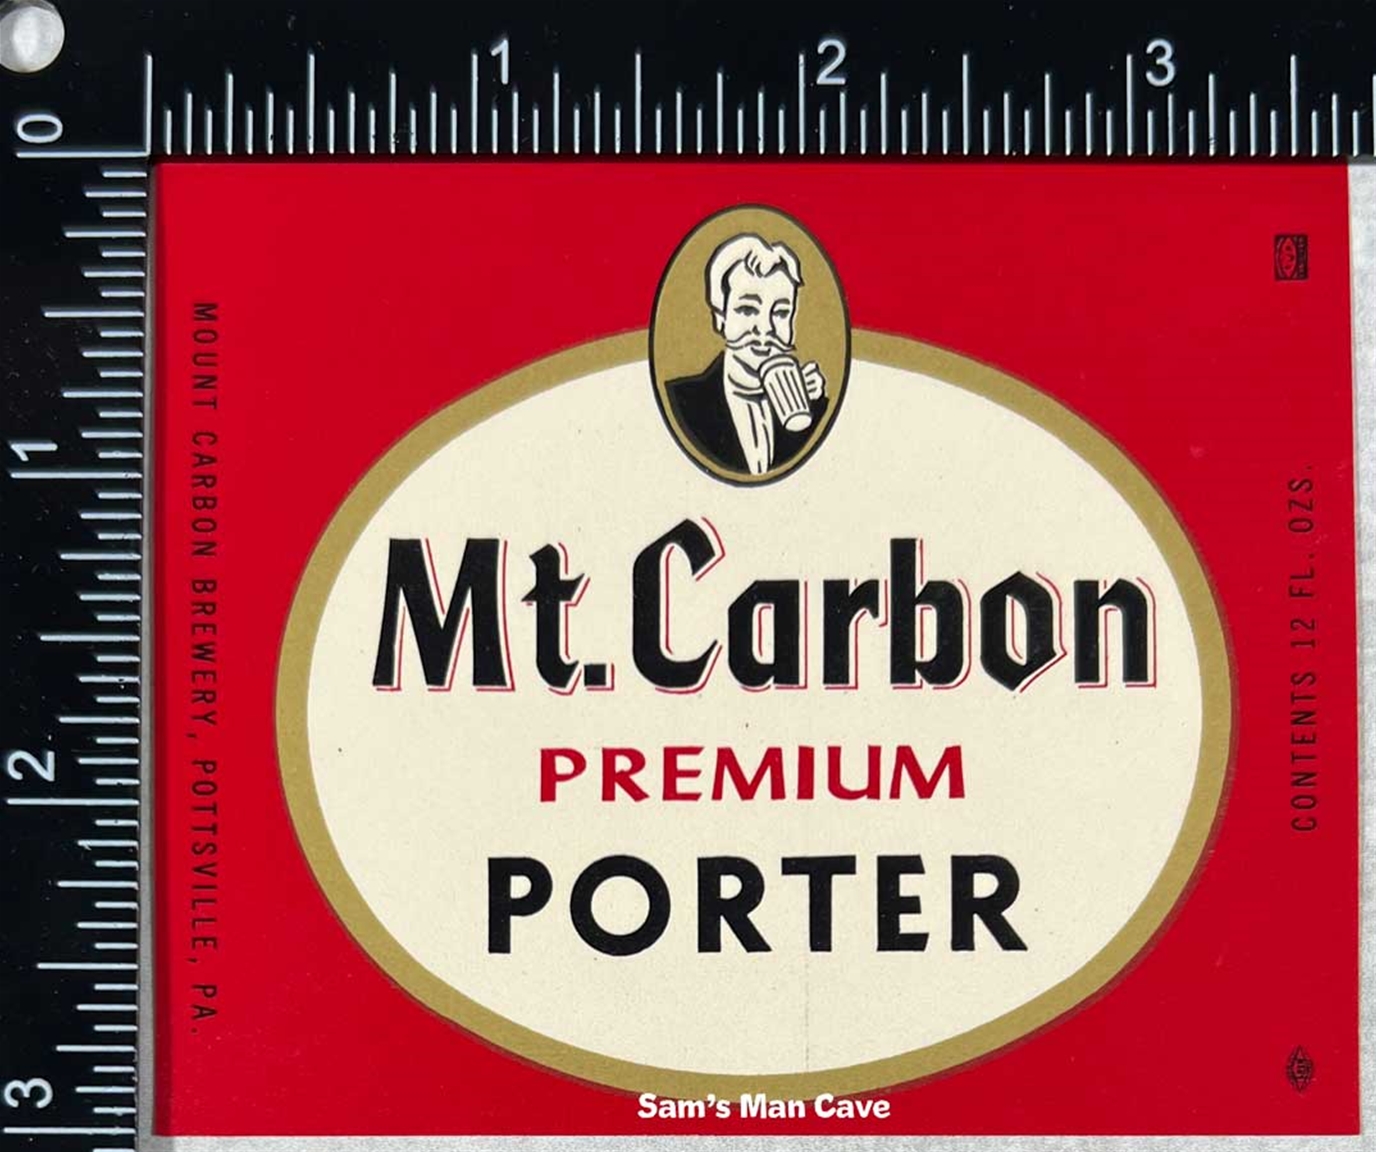 Mount Carbon Premium Porter Beer Label